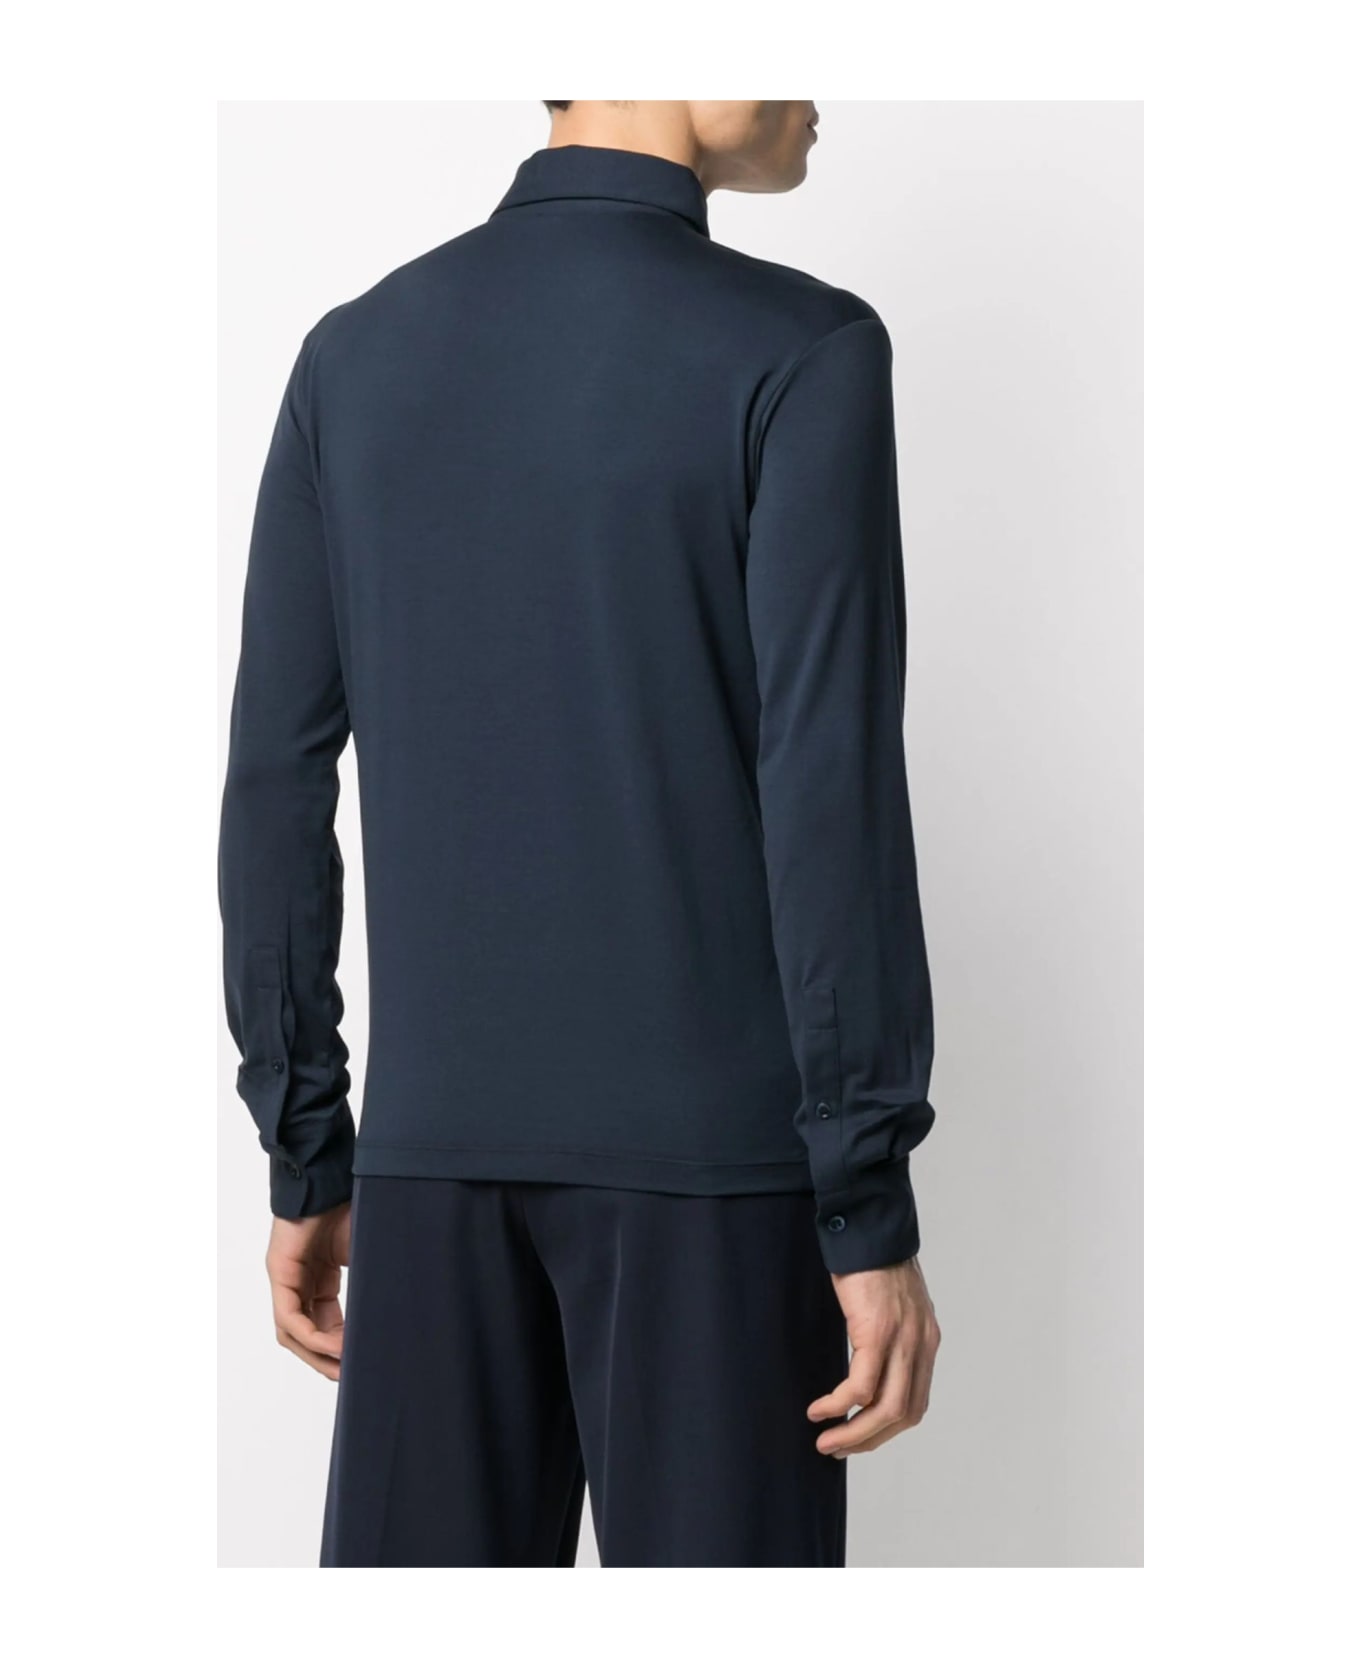 Cruciani Navy Blue Cotton Blend Polo Shirt - Blue